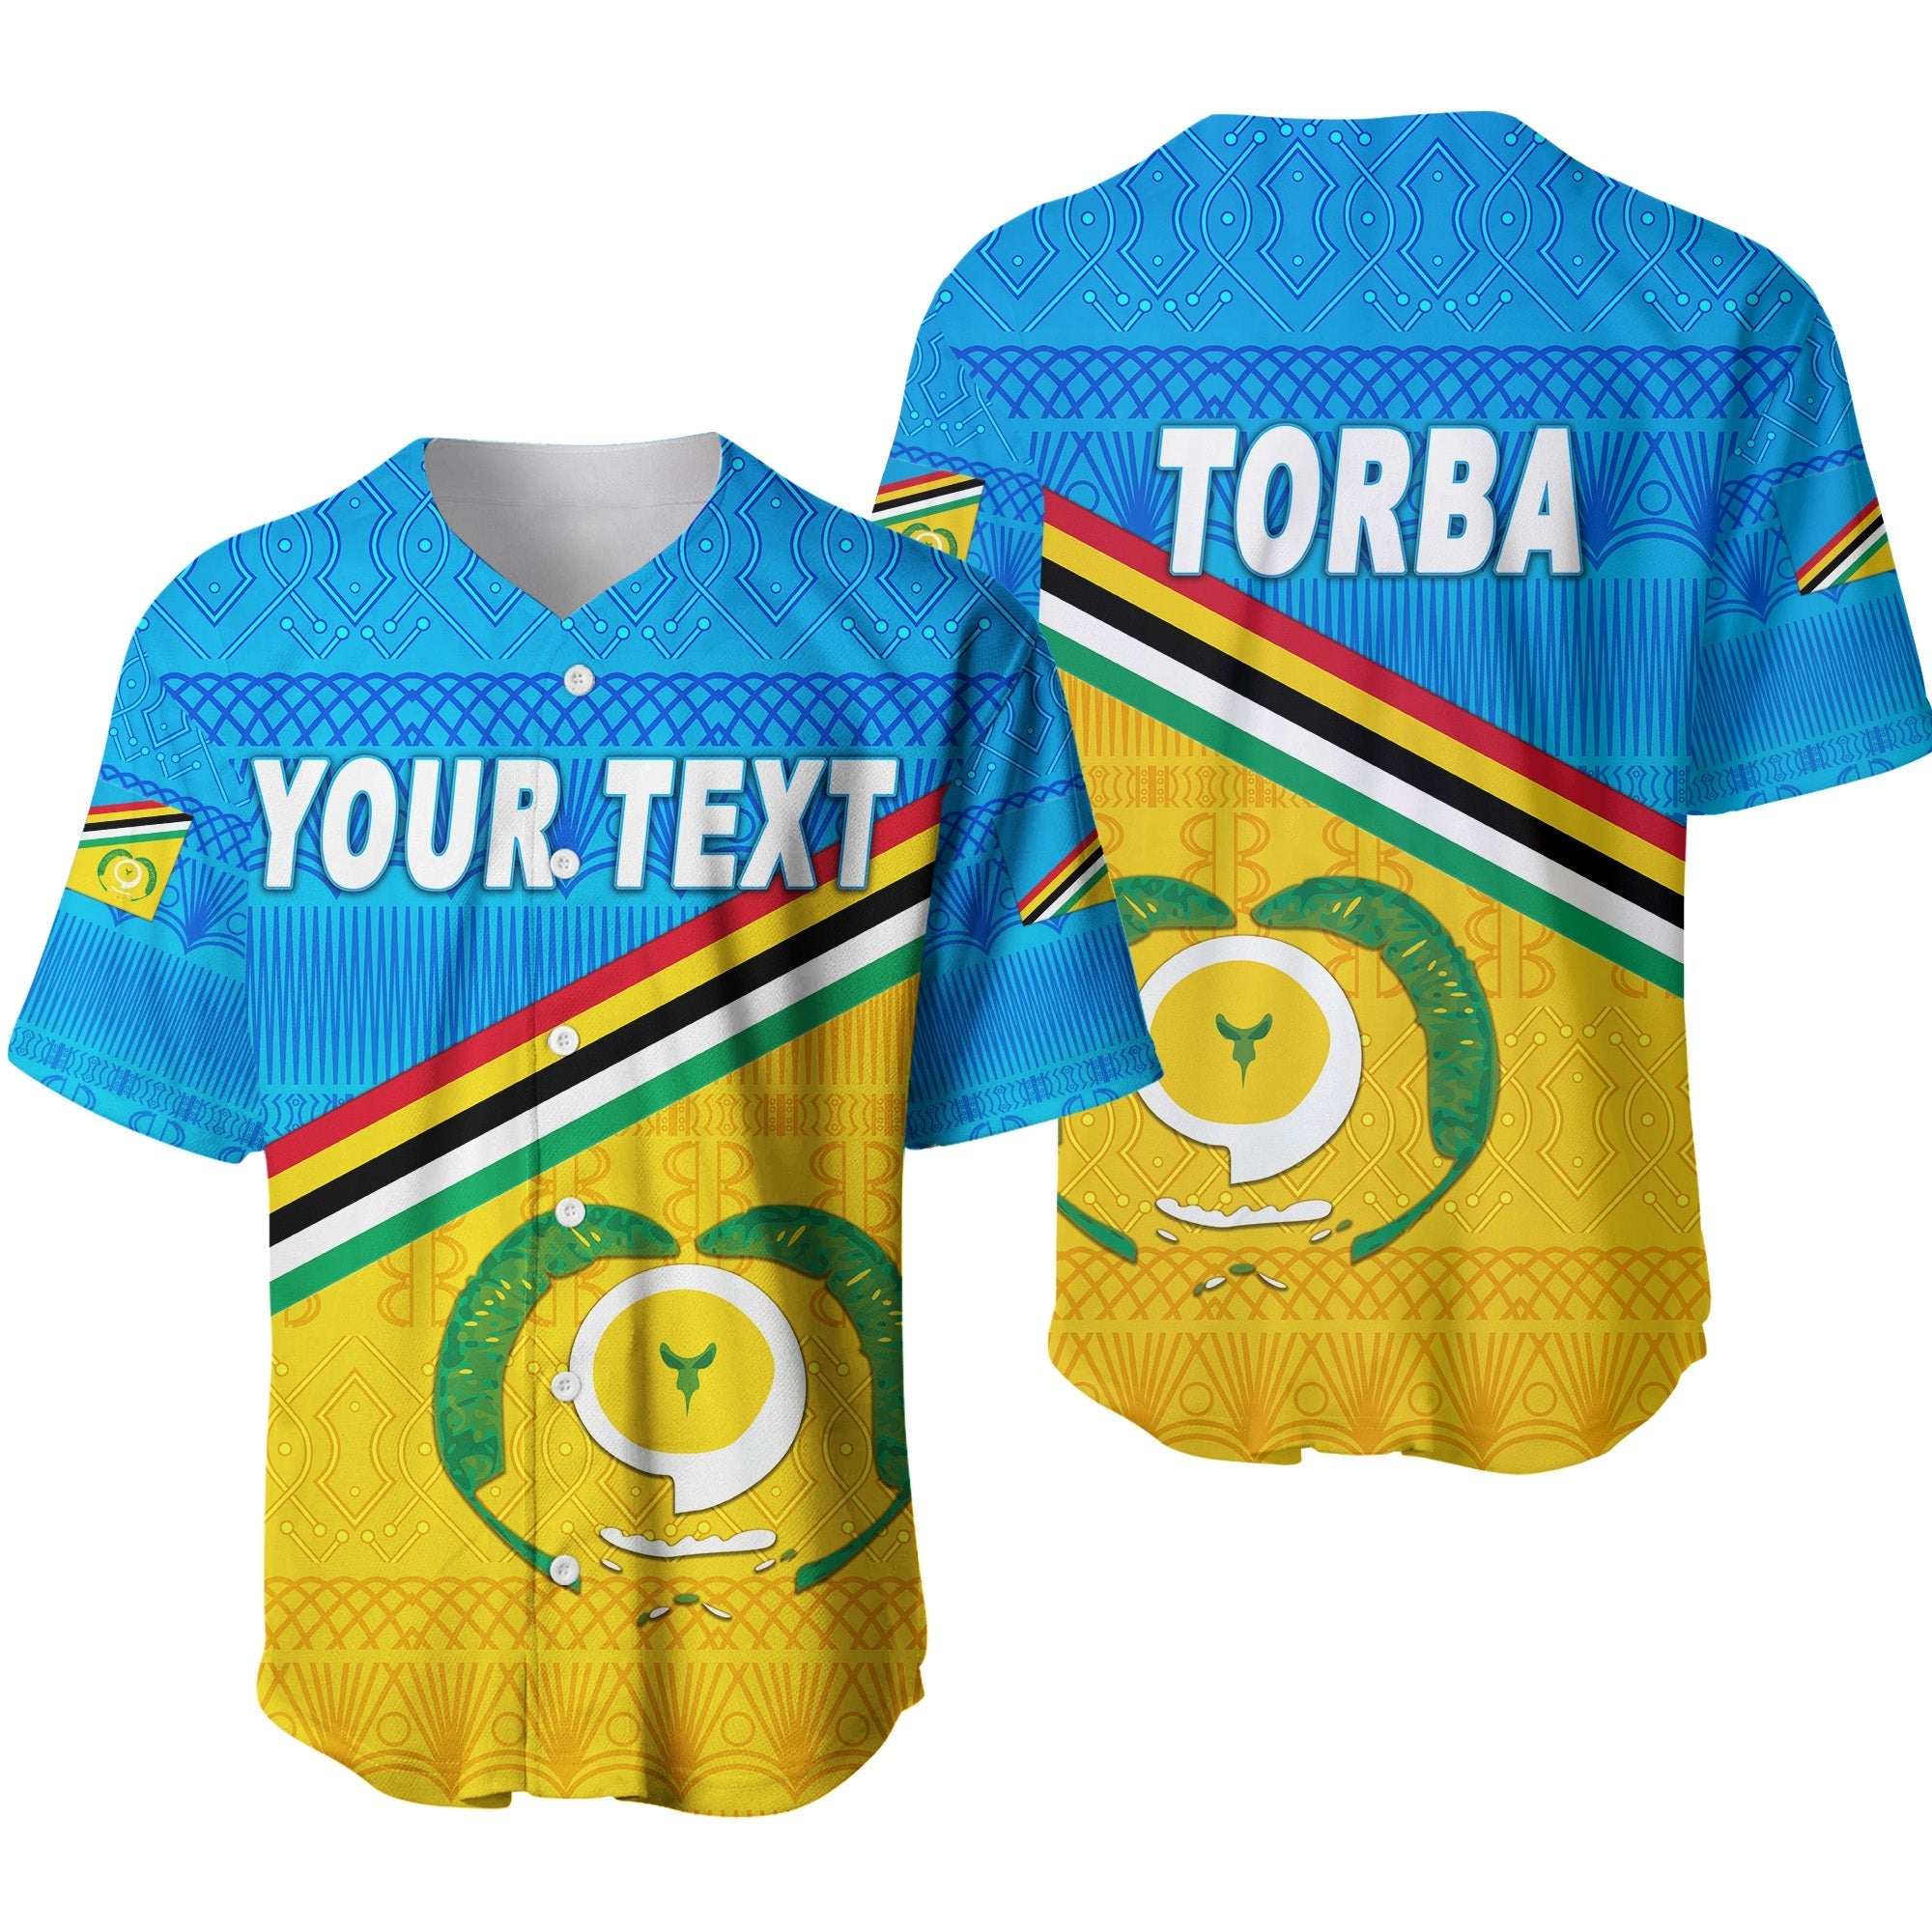 custom-personalised-torba-province-baseball-jersey-vanuatu-pattern-traditional-style